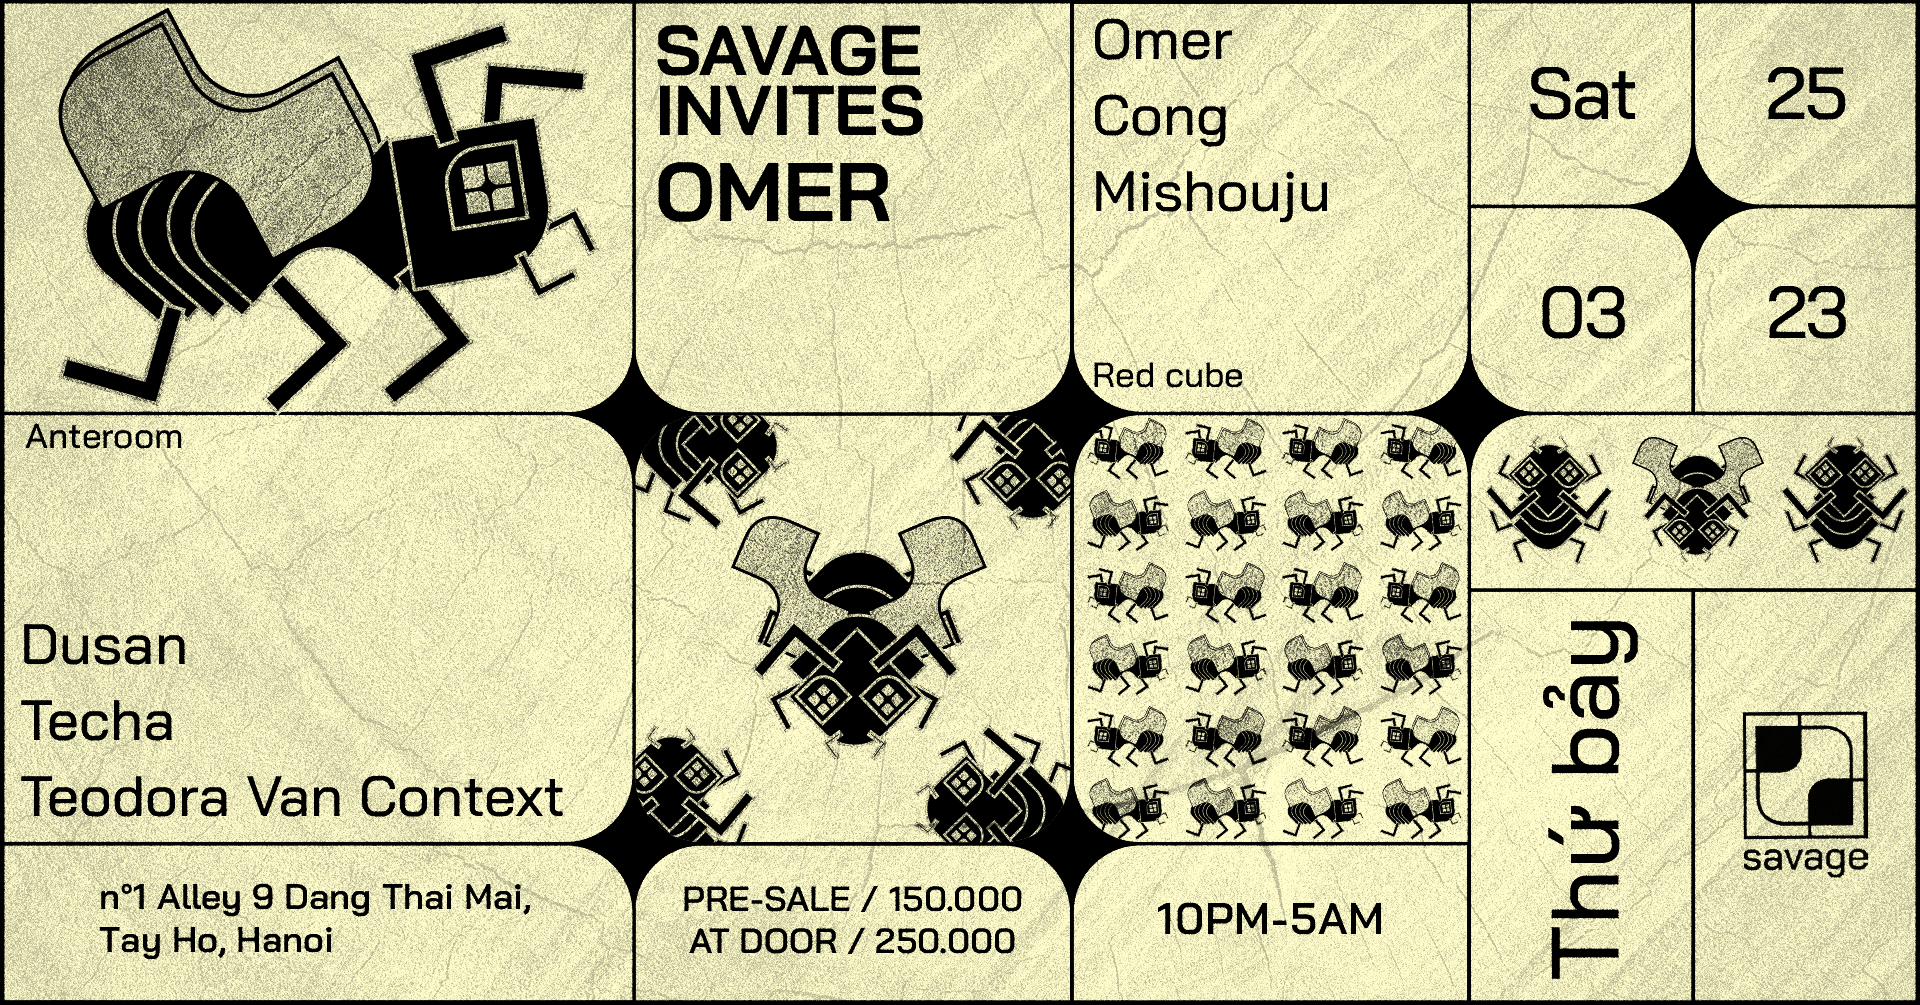 Savage Invites Omer - フライヤー裏